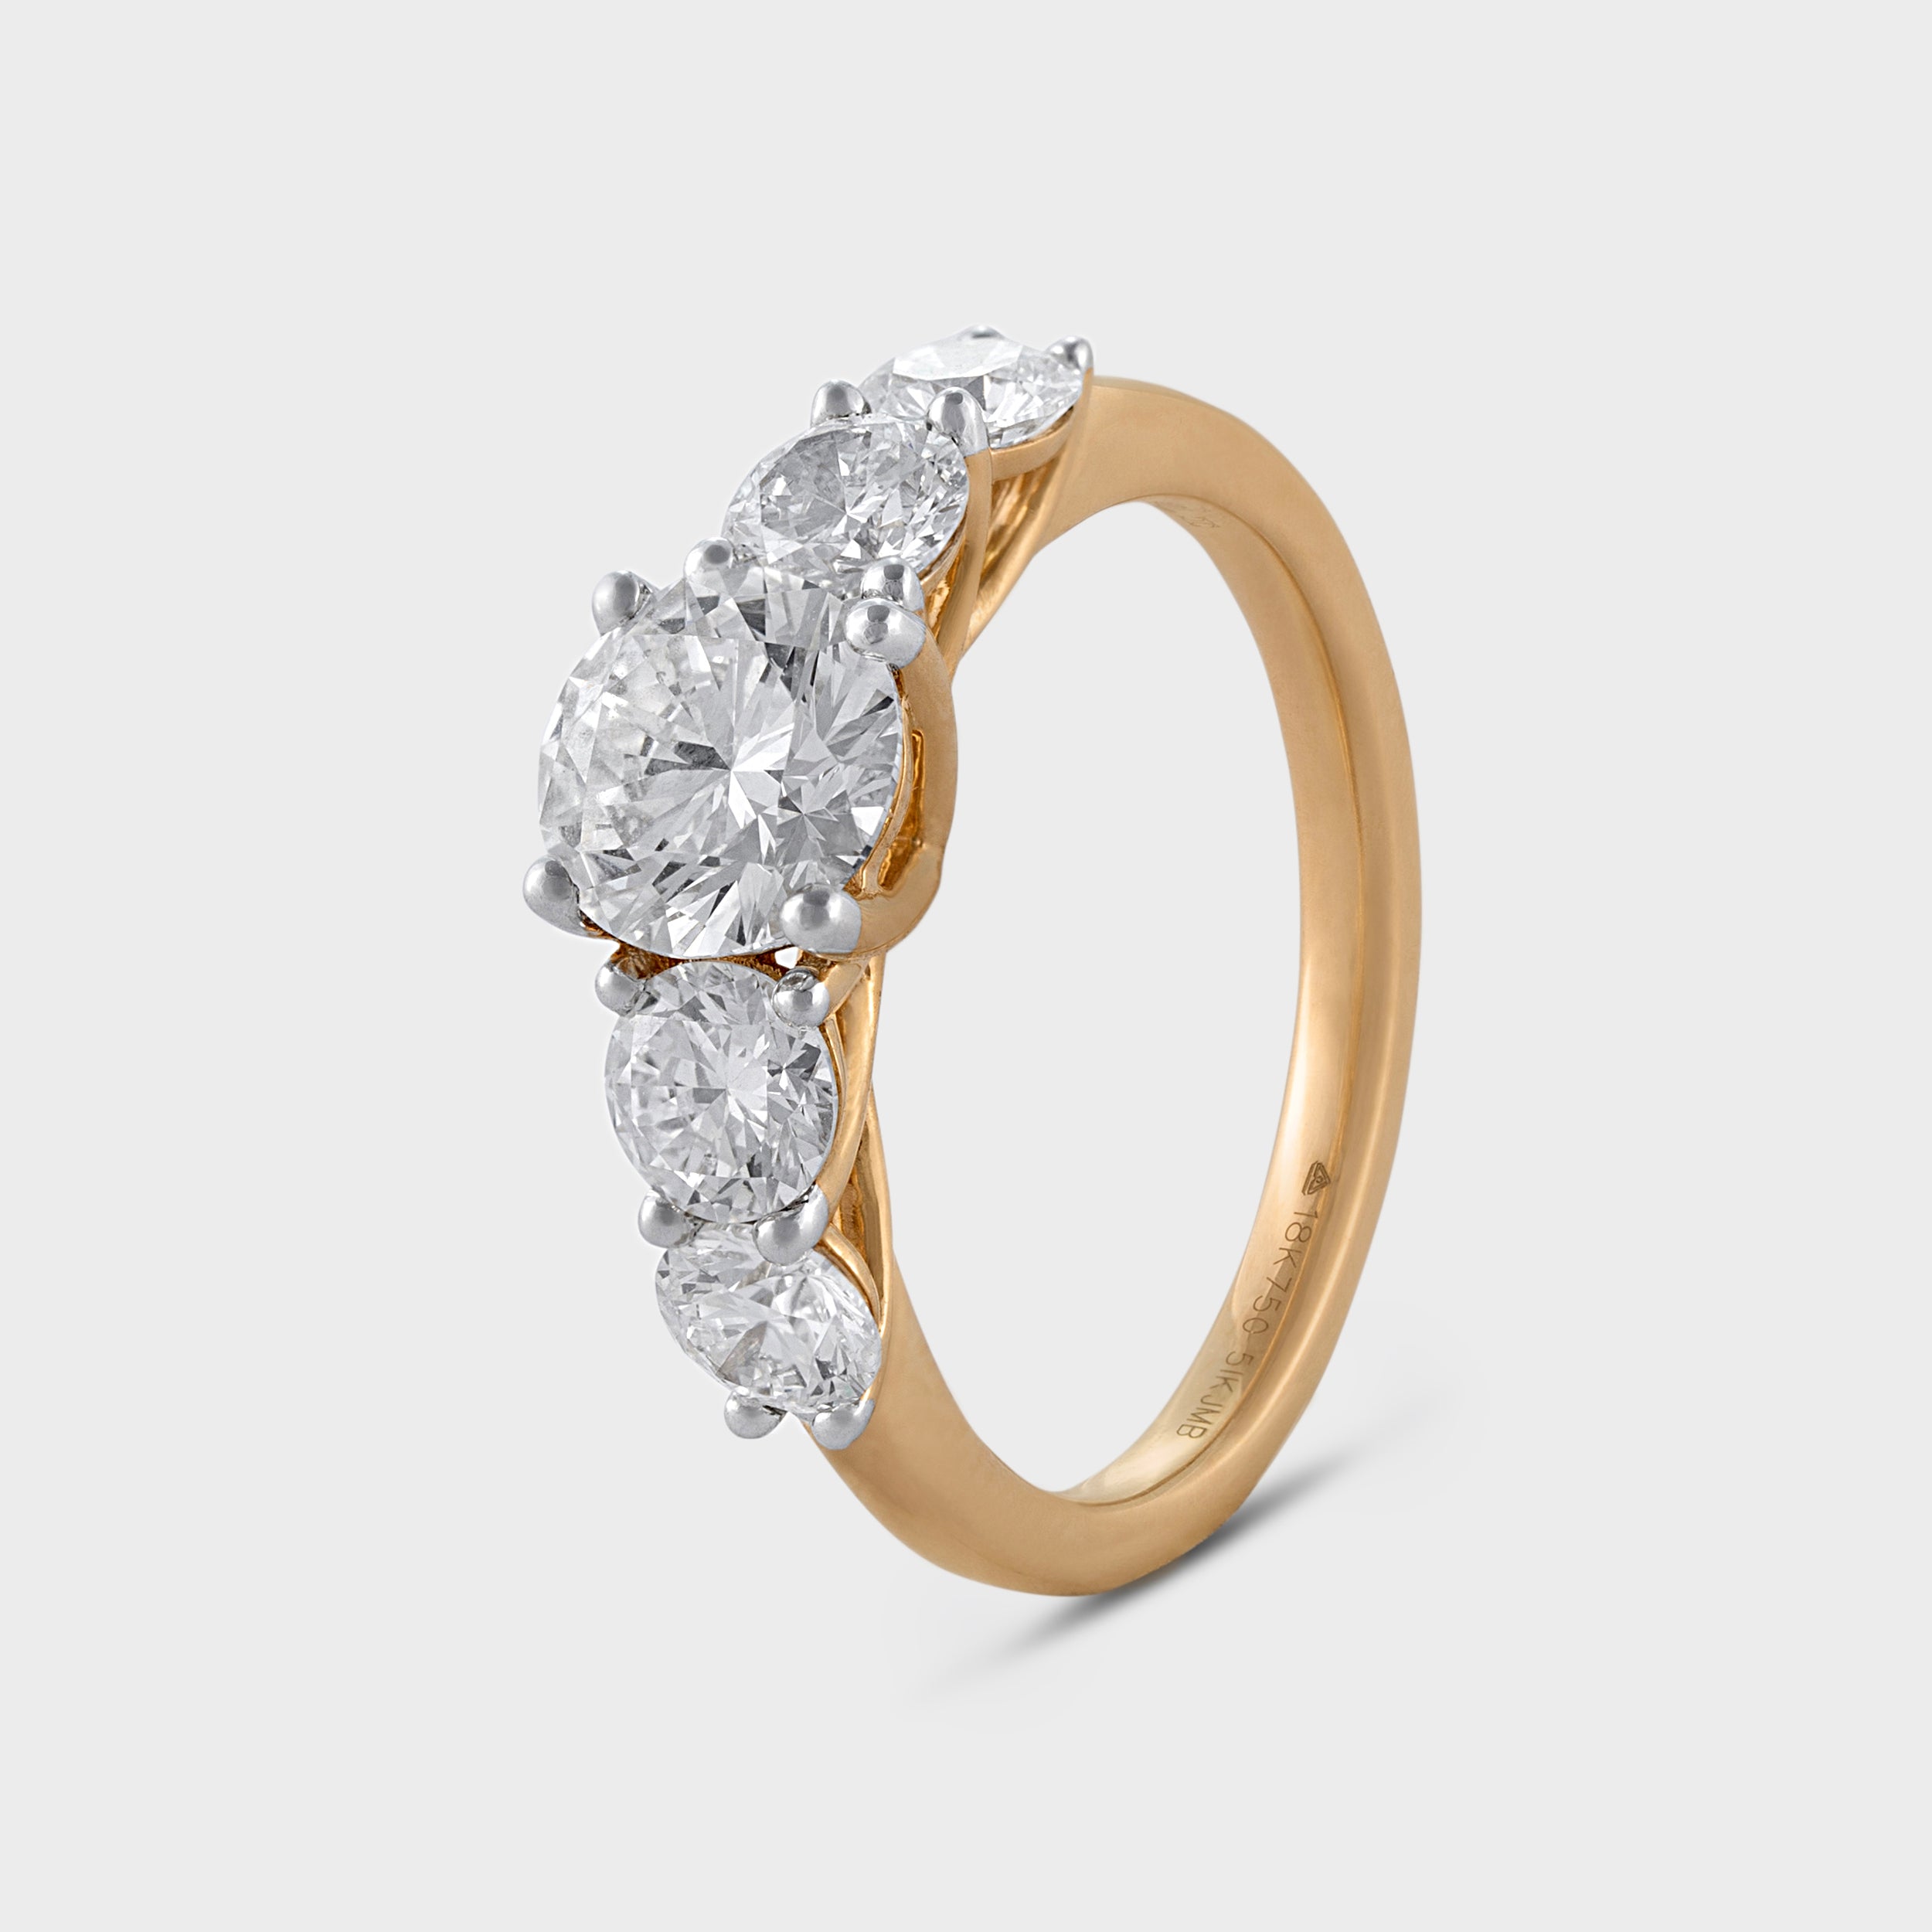 Innovative Brilliance: Unique Lab Grown Solitaire Diamond Ring | SKU: 0019503837